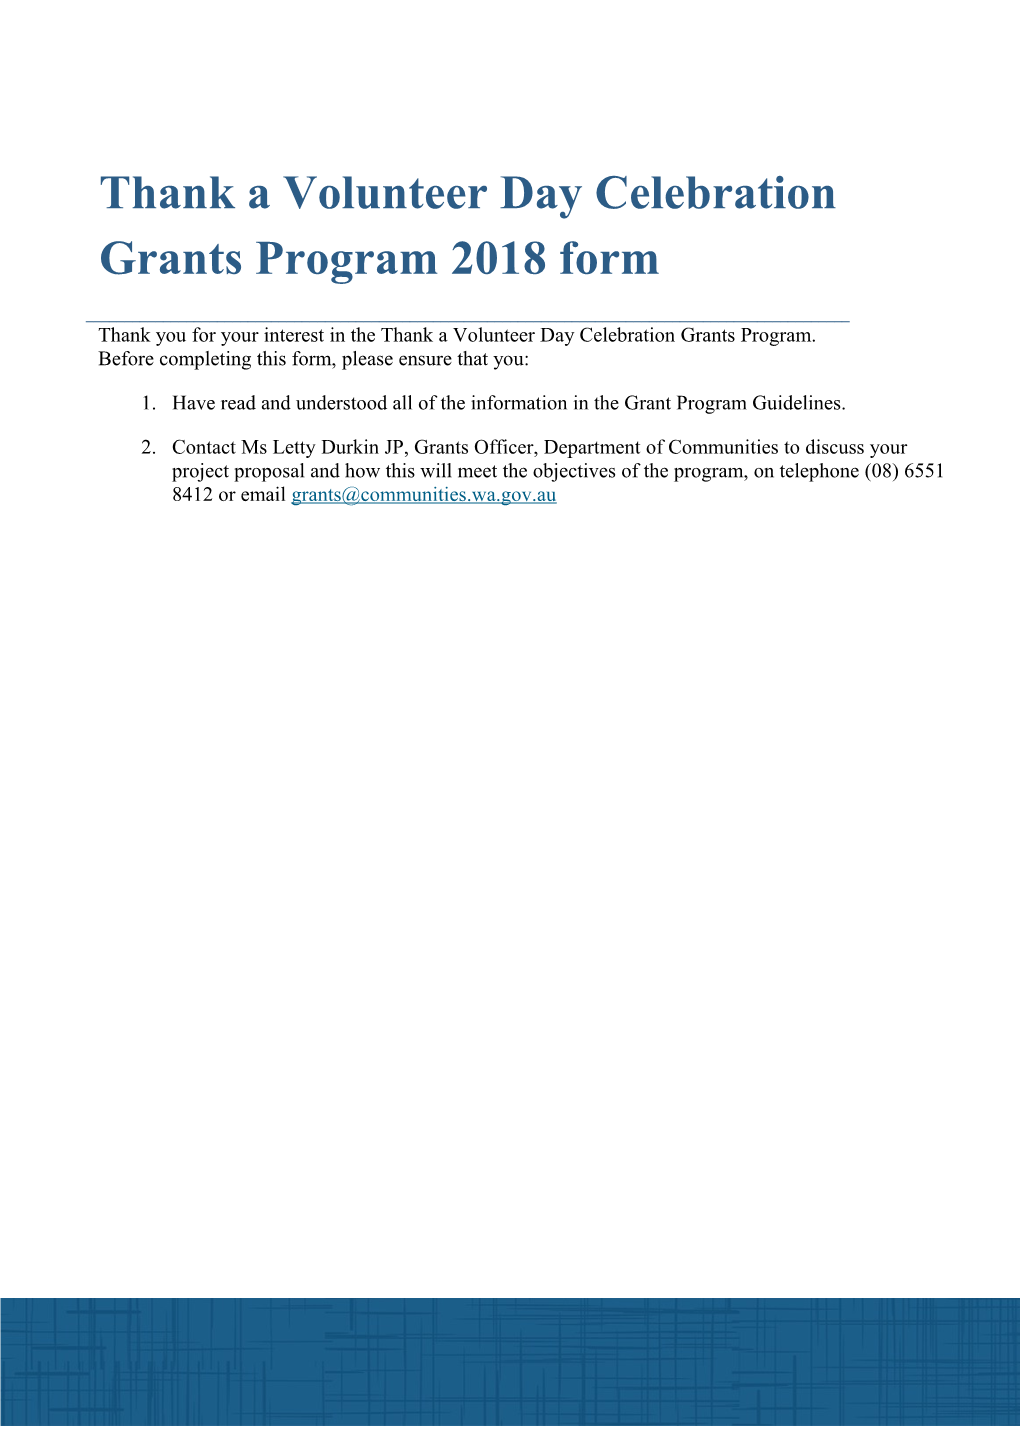 Thank a Volunteer Day Celebration Grants Program Application Form